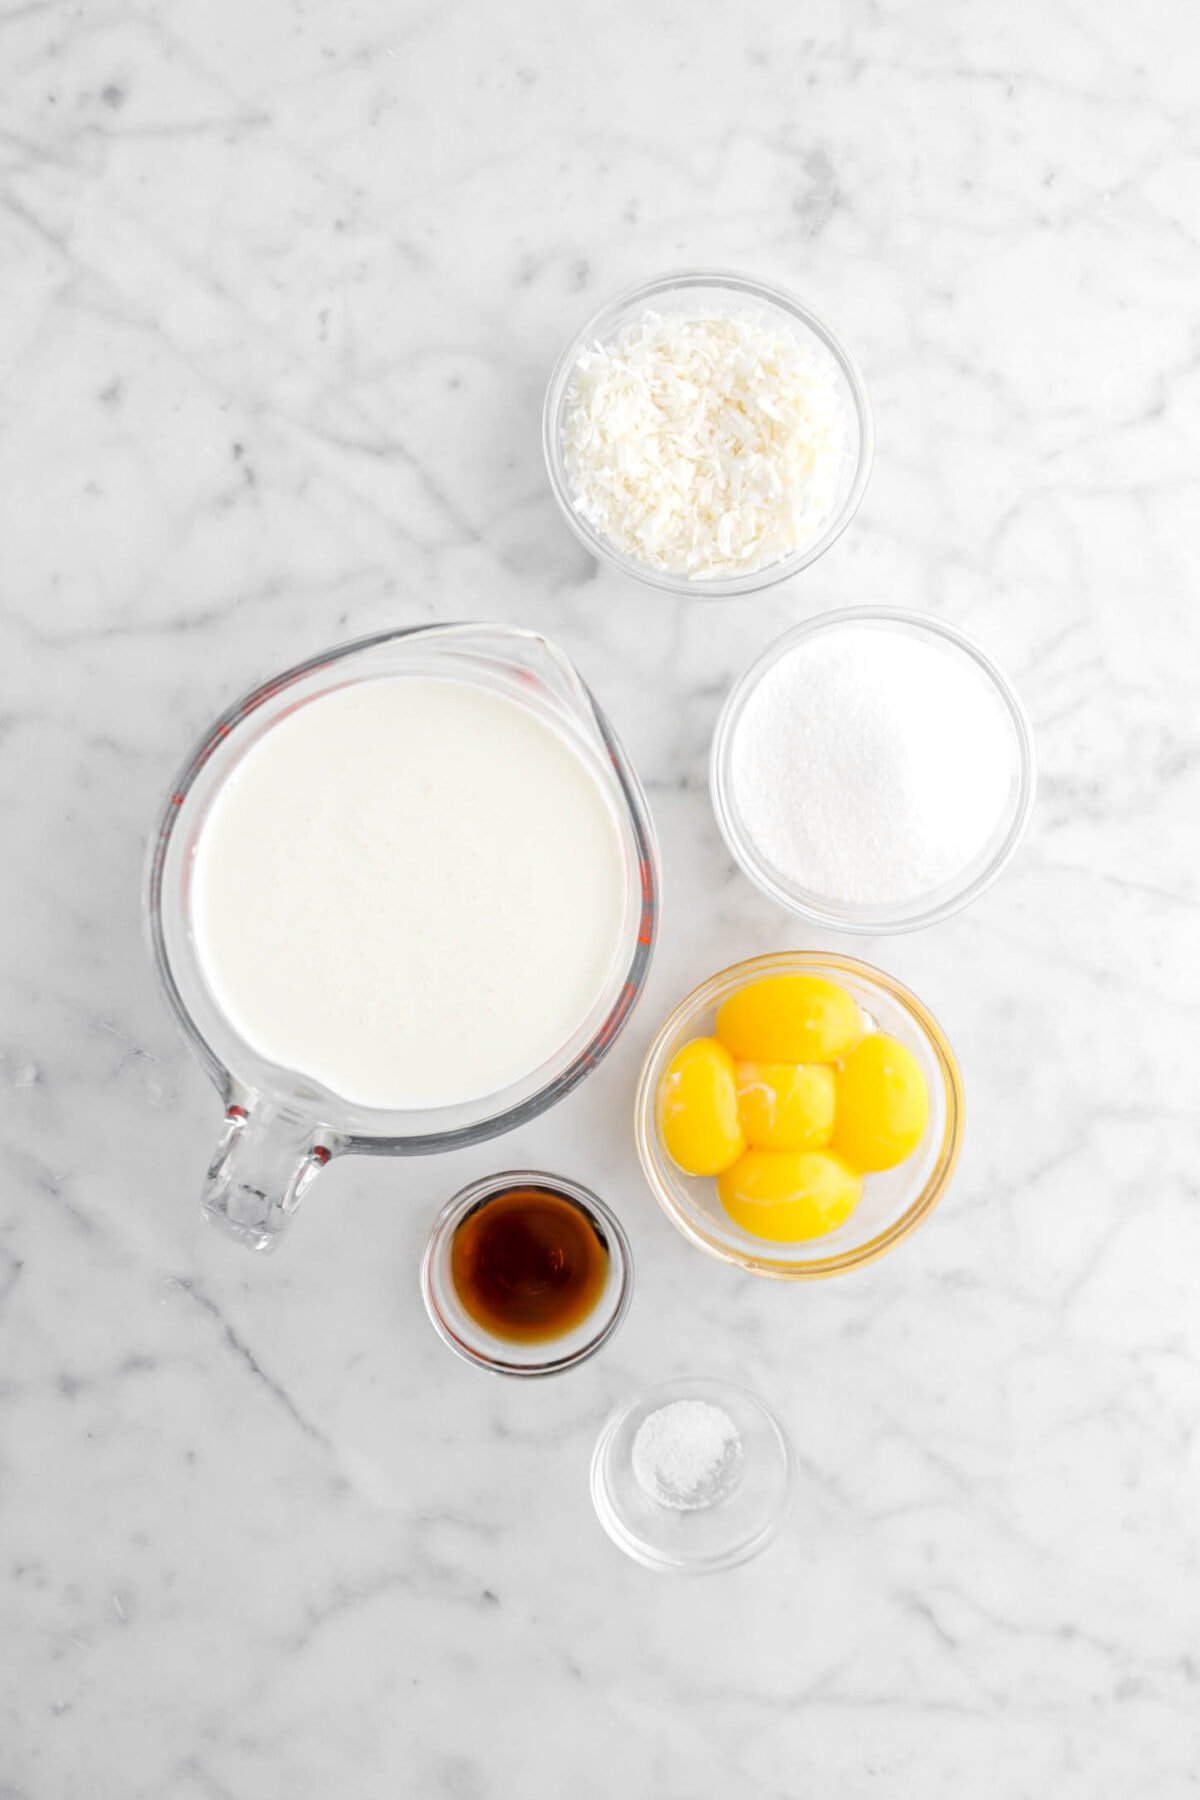 shredded coconut, sugar, egg yolks, heavy cream, vanilla, and salt on marble surface